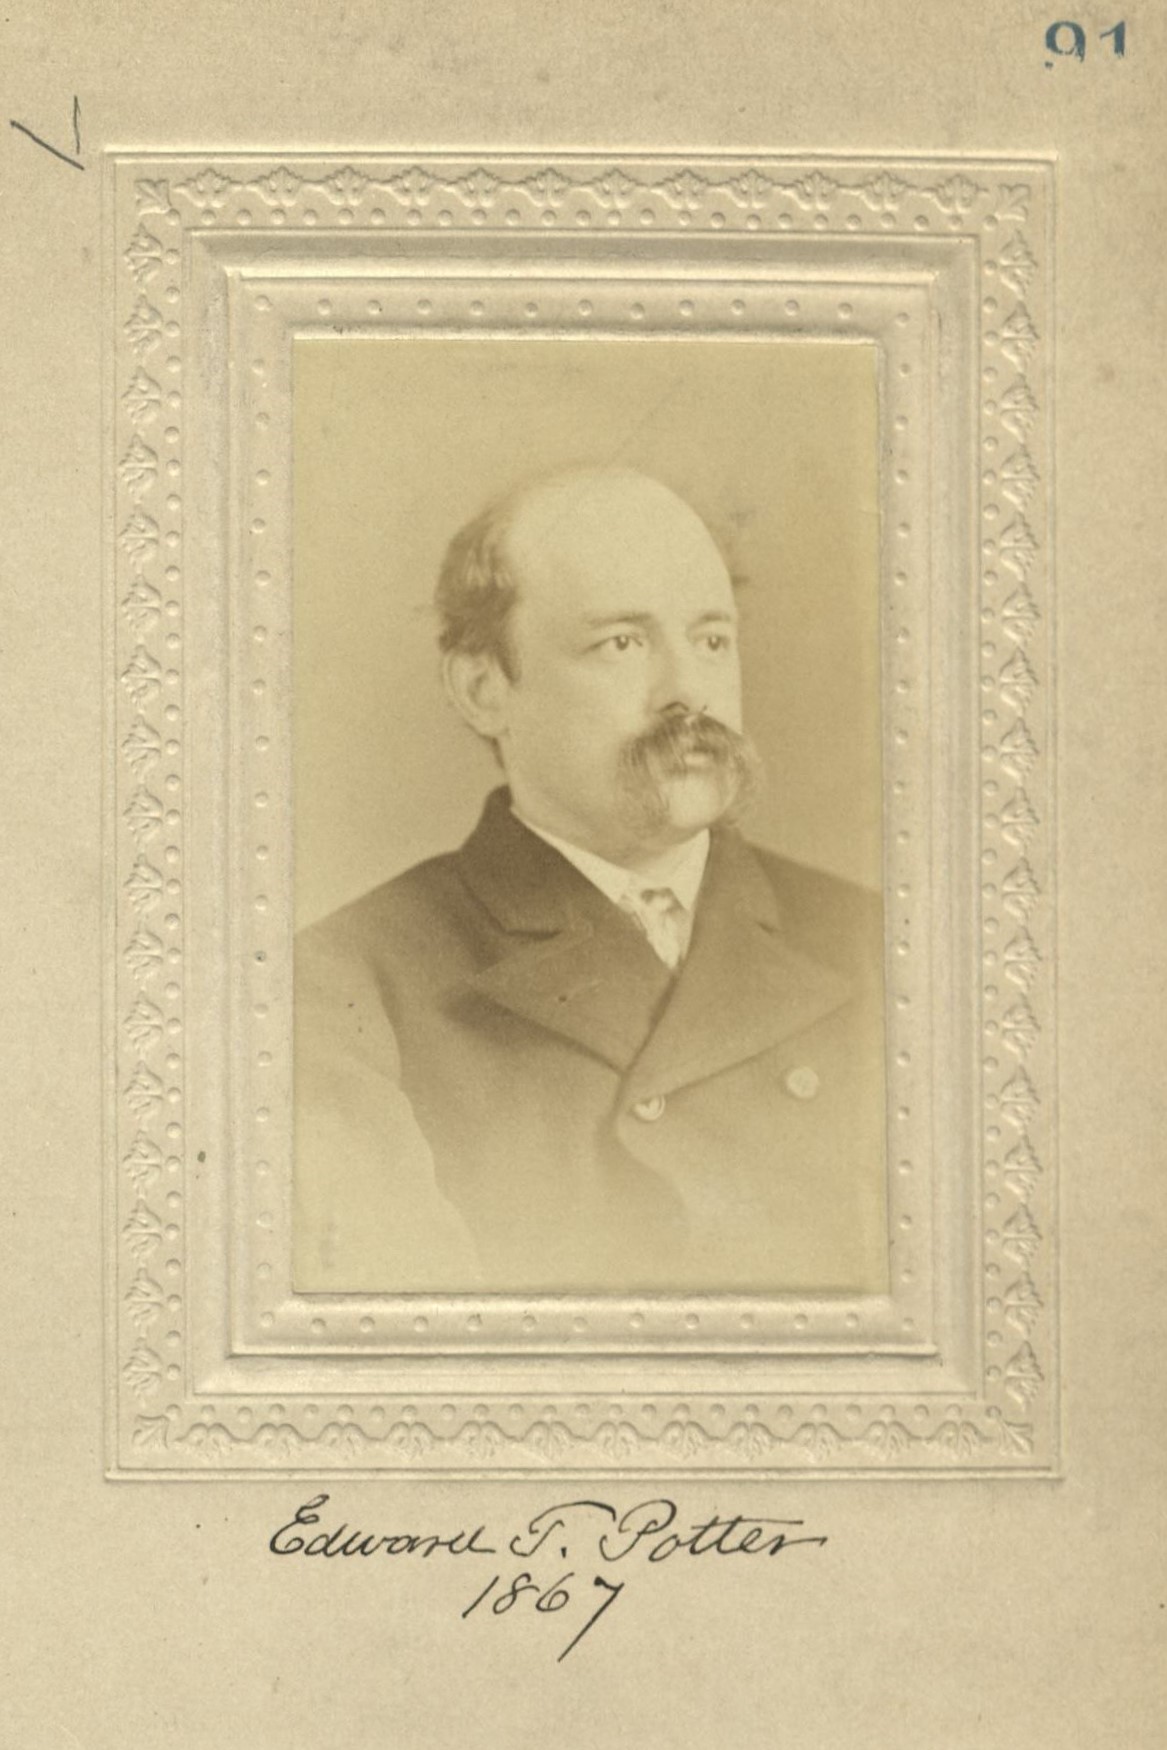 Member portrait of Edward T. Potter